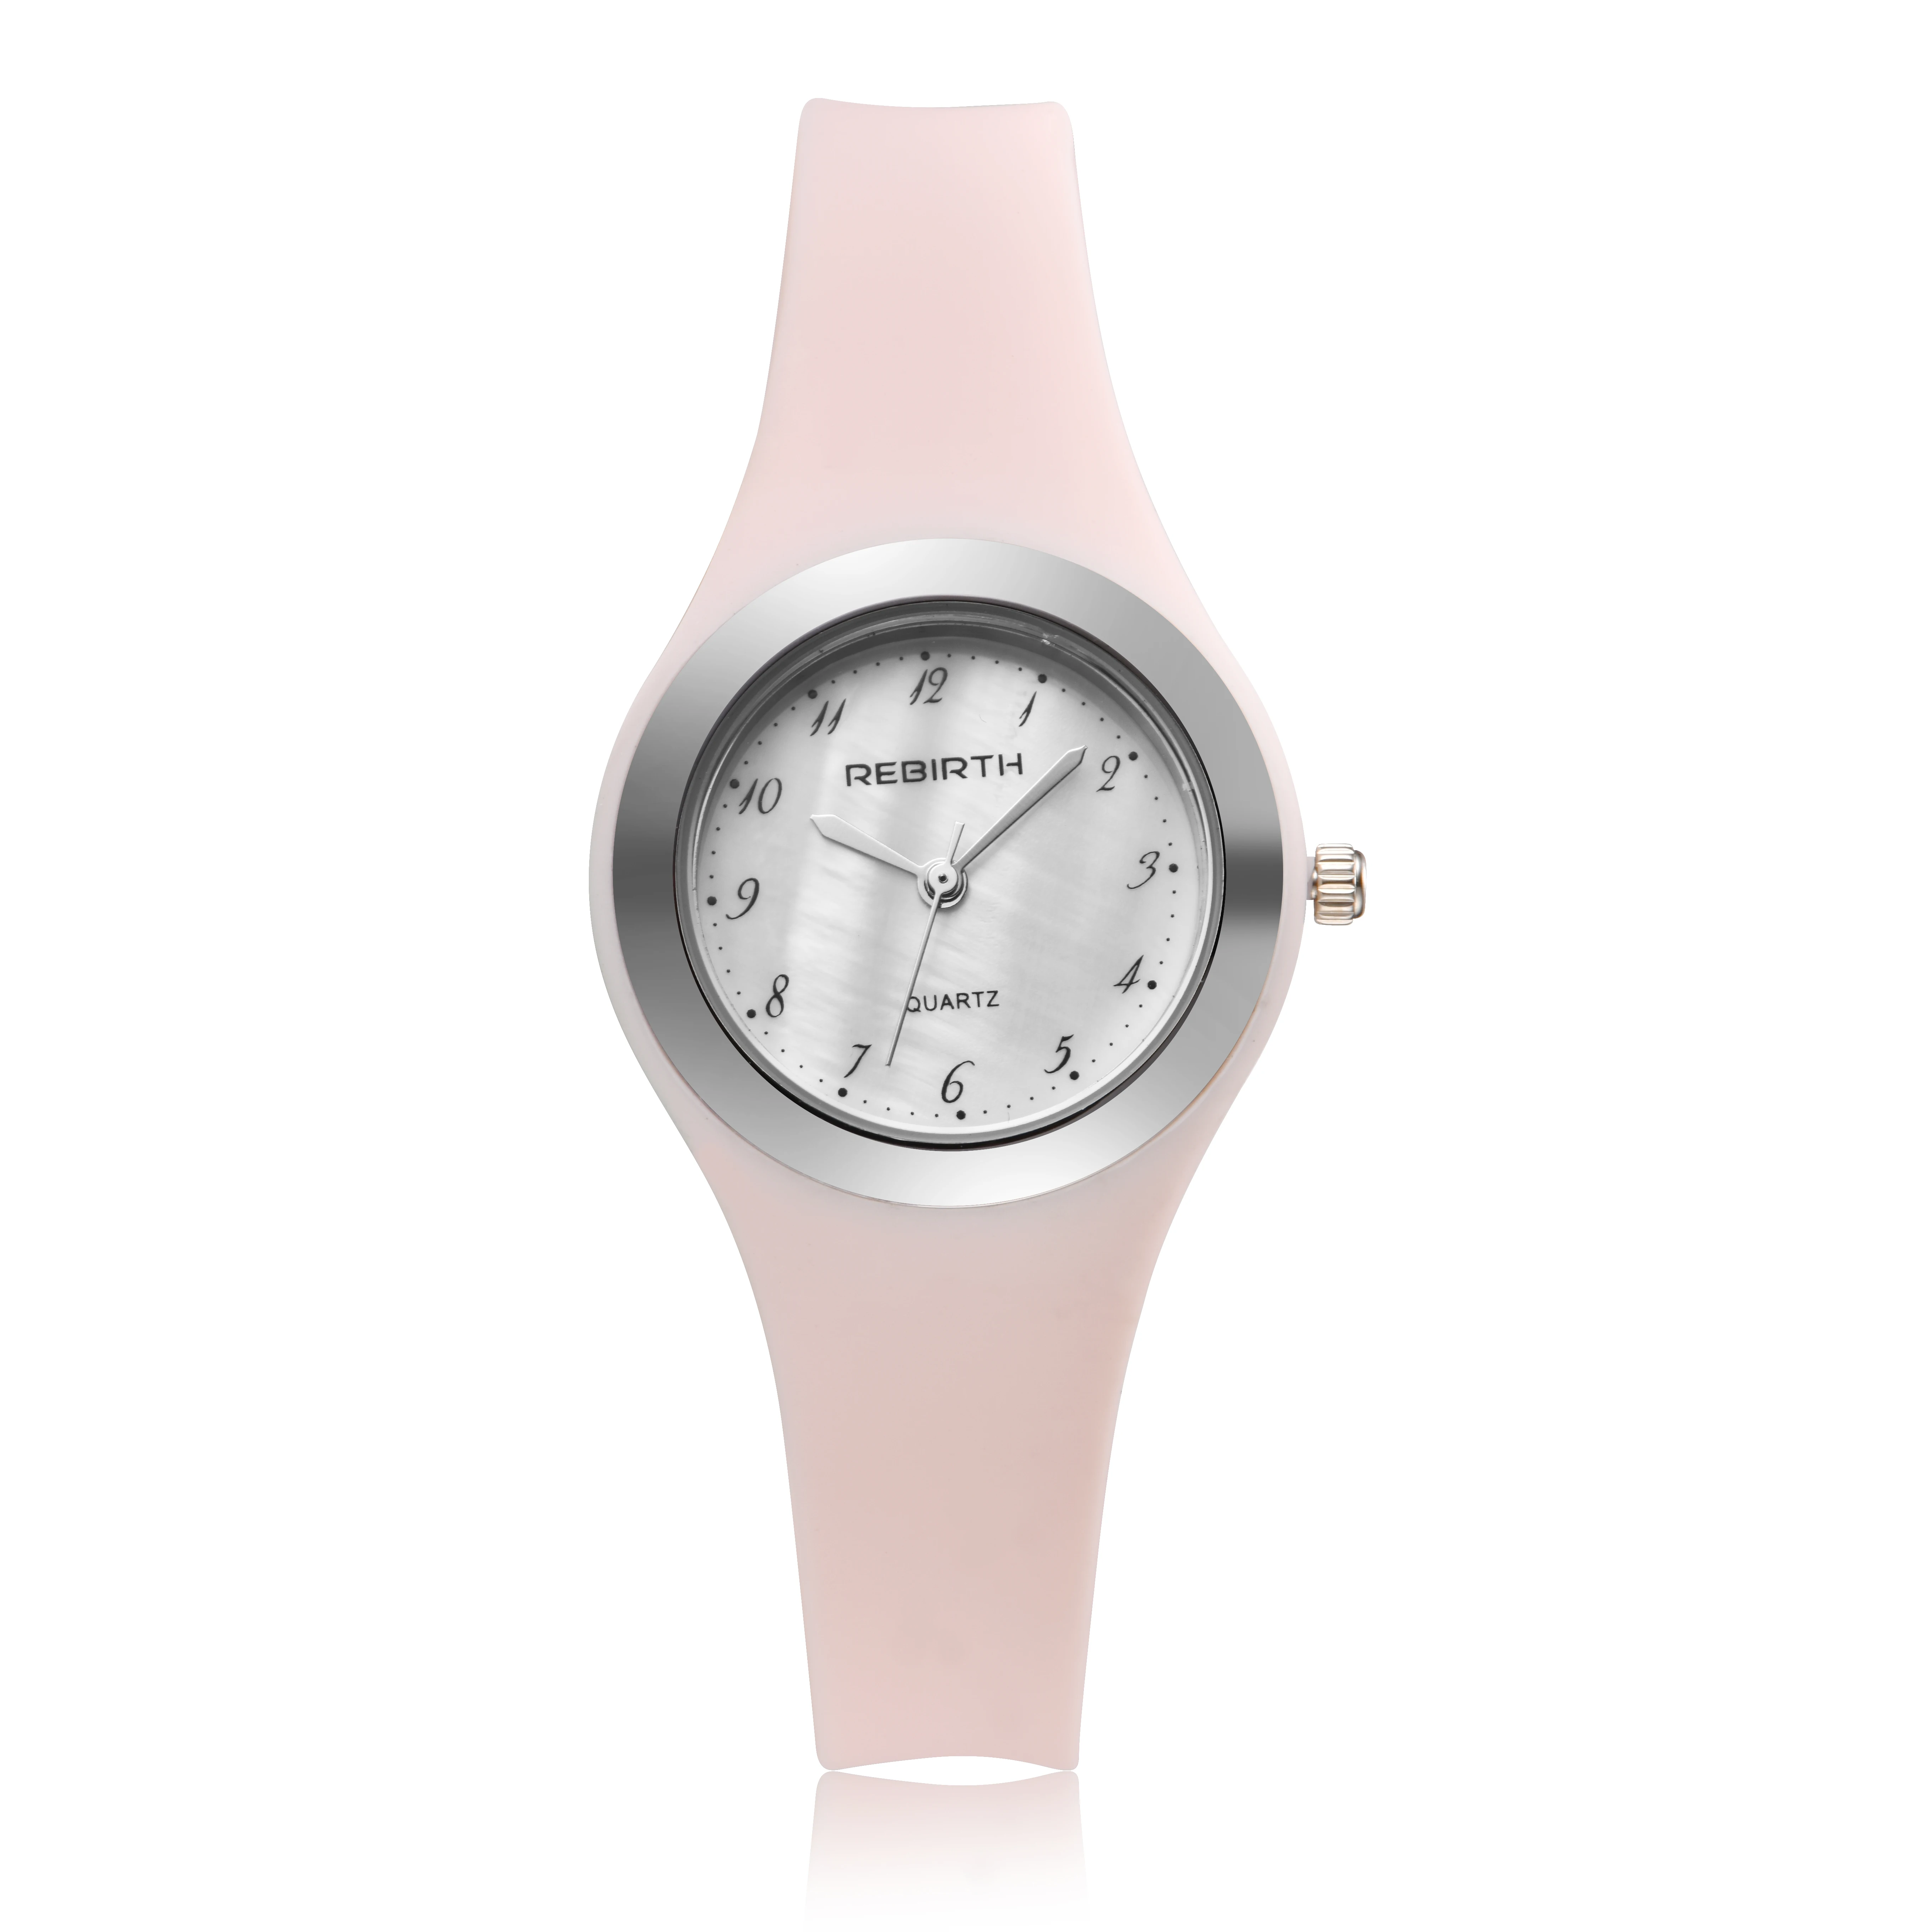 

REBIRTH RE091 cheap pink girls quartz watch perfect Silicone band Waterproof analog display small casual wrist watch